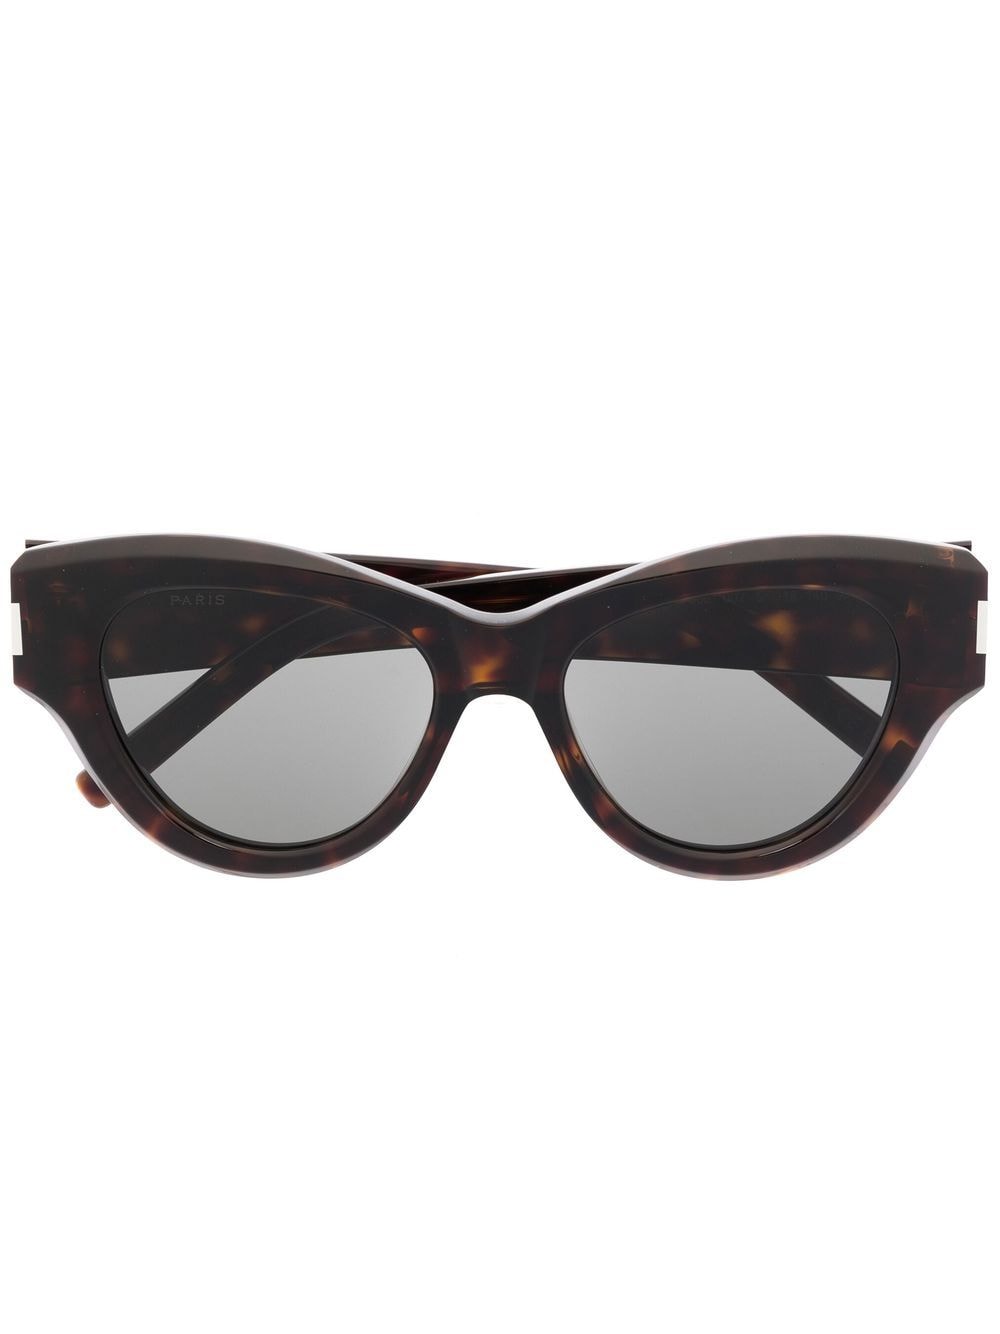 Saint Laurent Eyewear tortoise-shell cat-eye sunglasses - Brown von Saint Laurent Eyewear